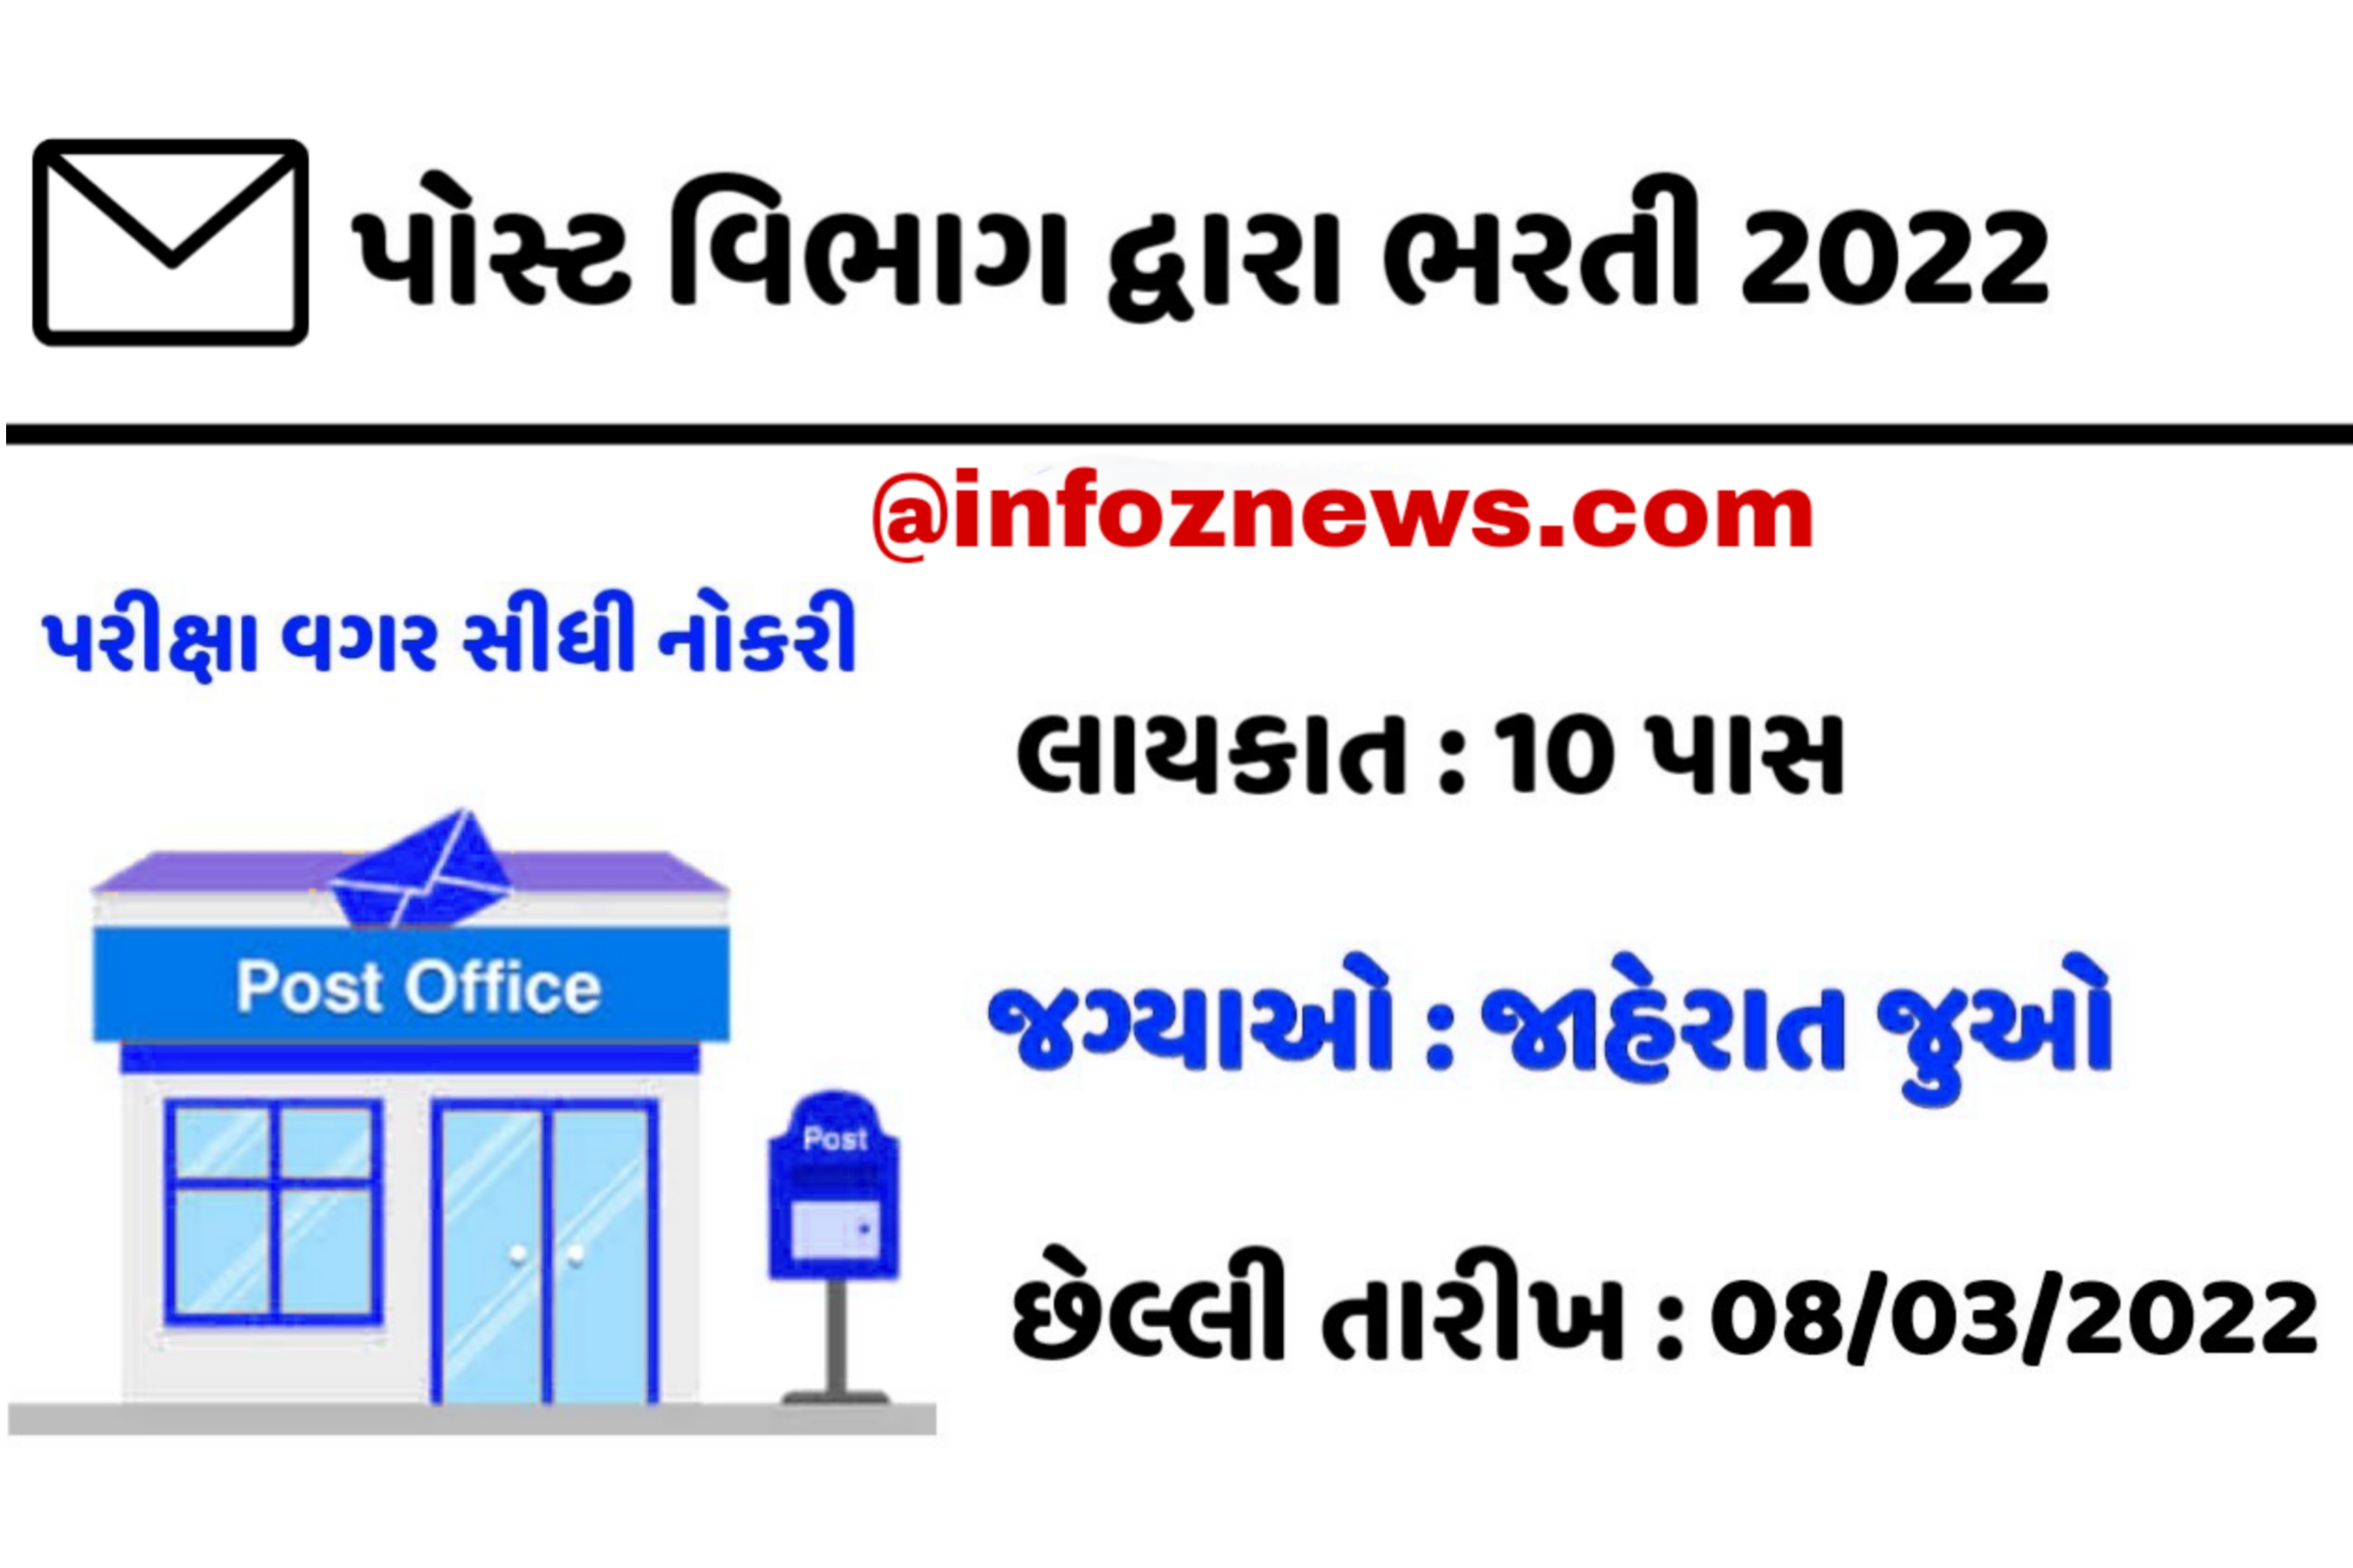 Post Office Recruitment 2022 Gujarat Gujarat Post Office Recruitment 2021 Post Office Recruitment 2021 Ahmedabad Gujarat Post Office Recruitment 2021 Result Gujarat Post Office Recruitment 2021 apply online Post Office Exam Date 2021 Gujarat